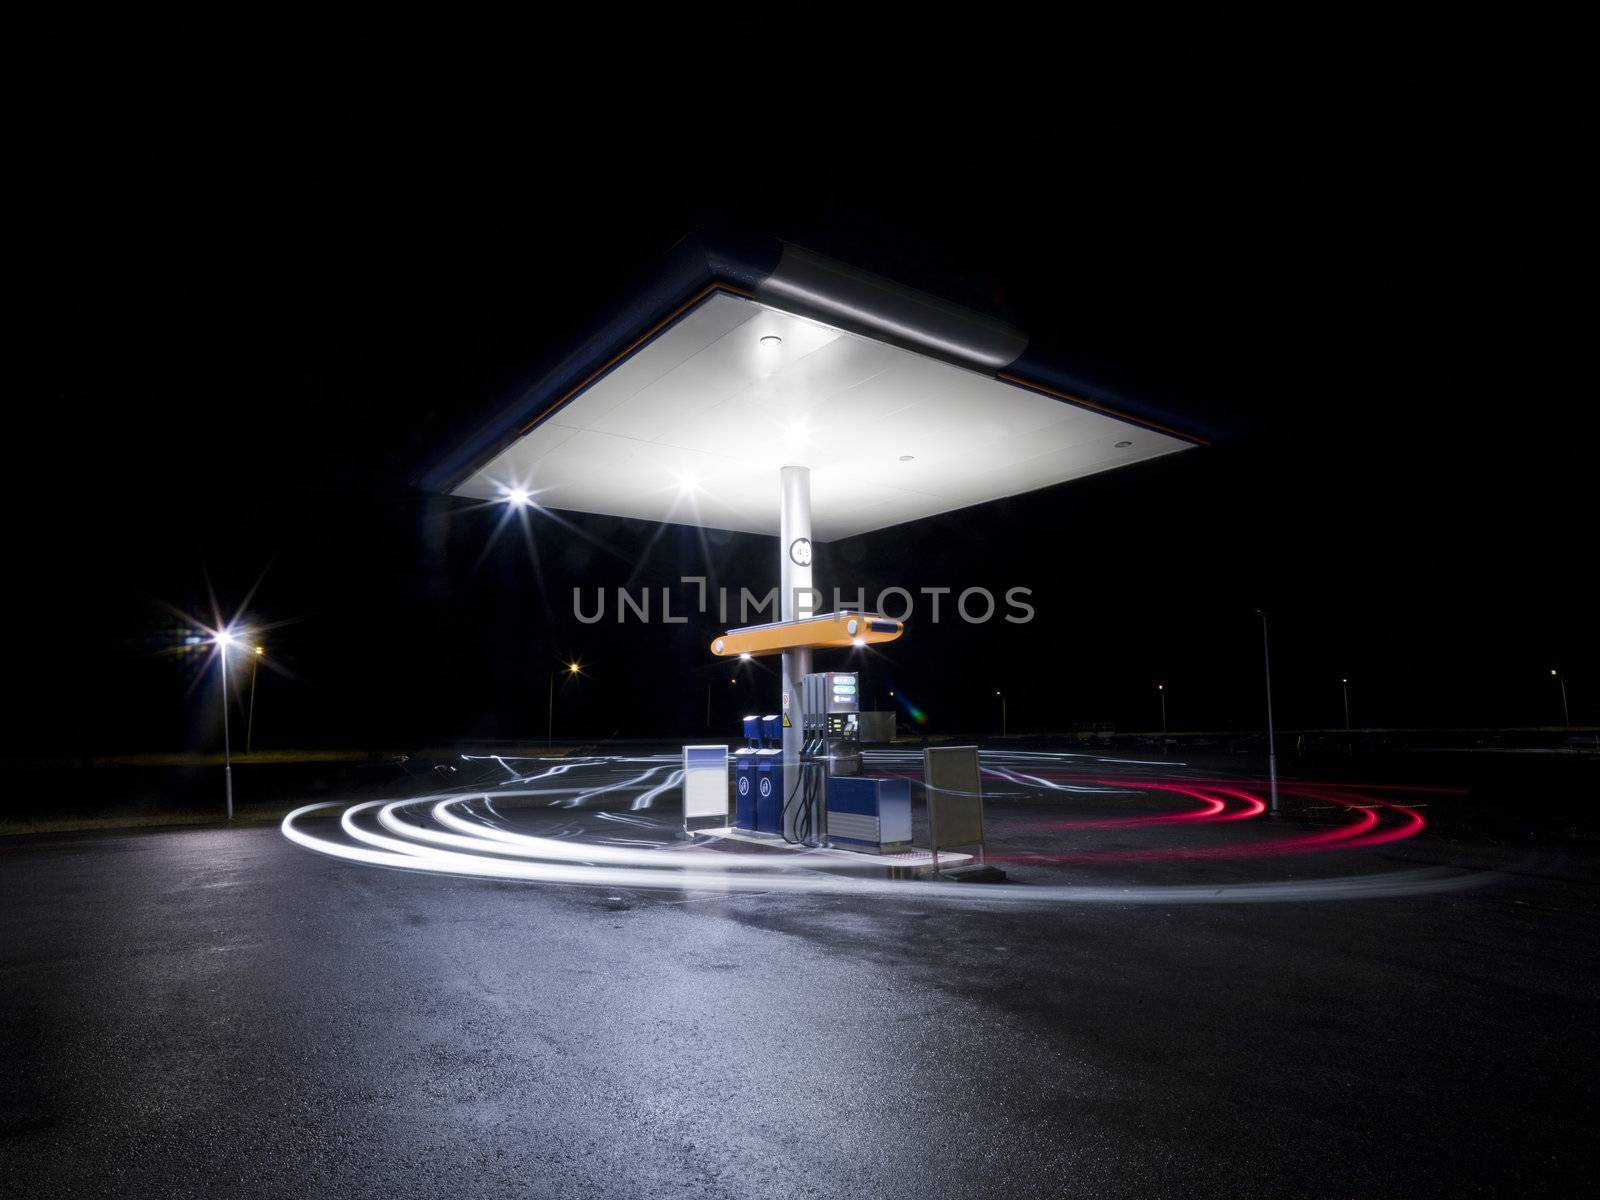 Traffic in movement at a petrolstation at night